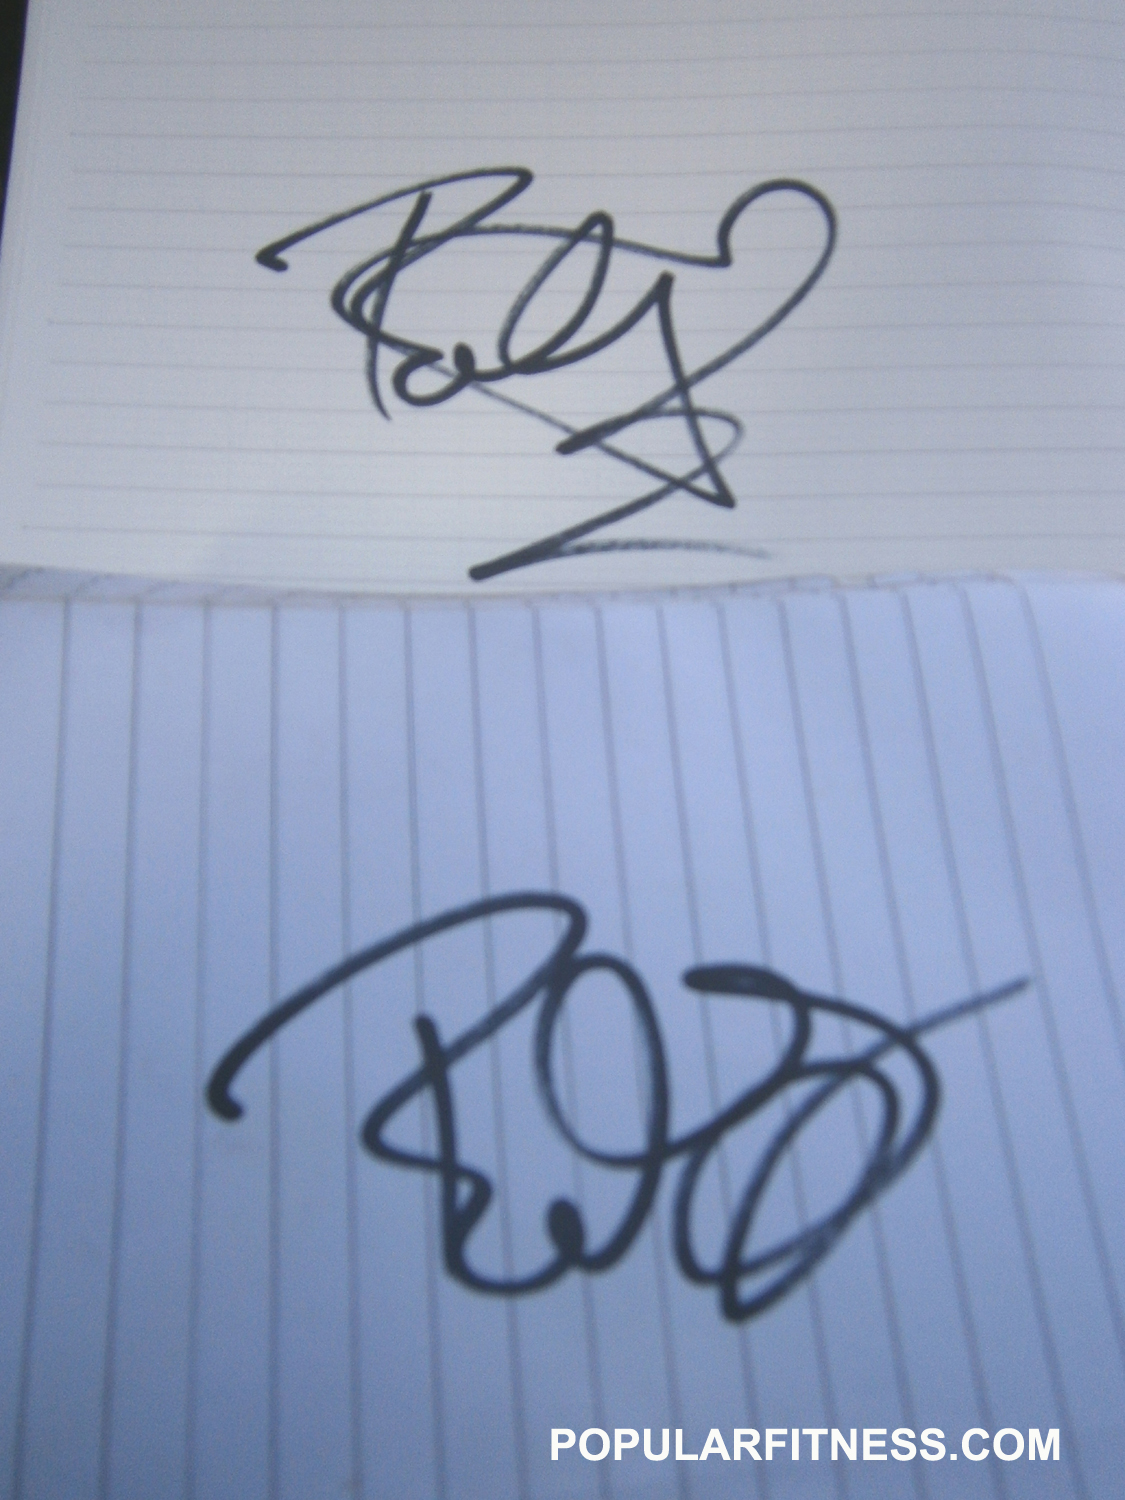 Billy Bob Thornton autographs